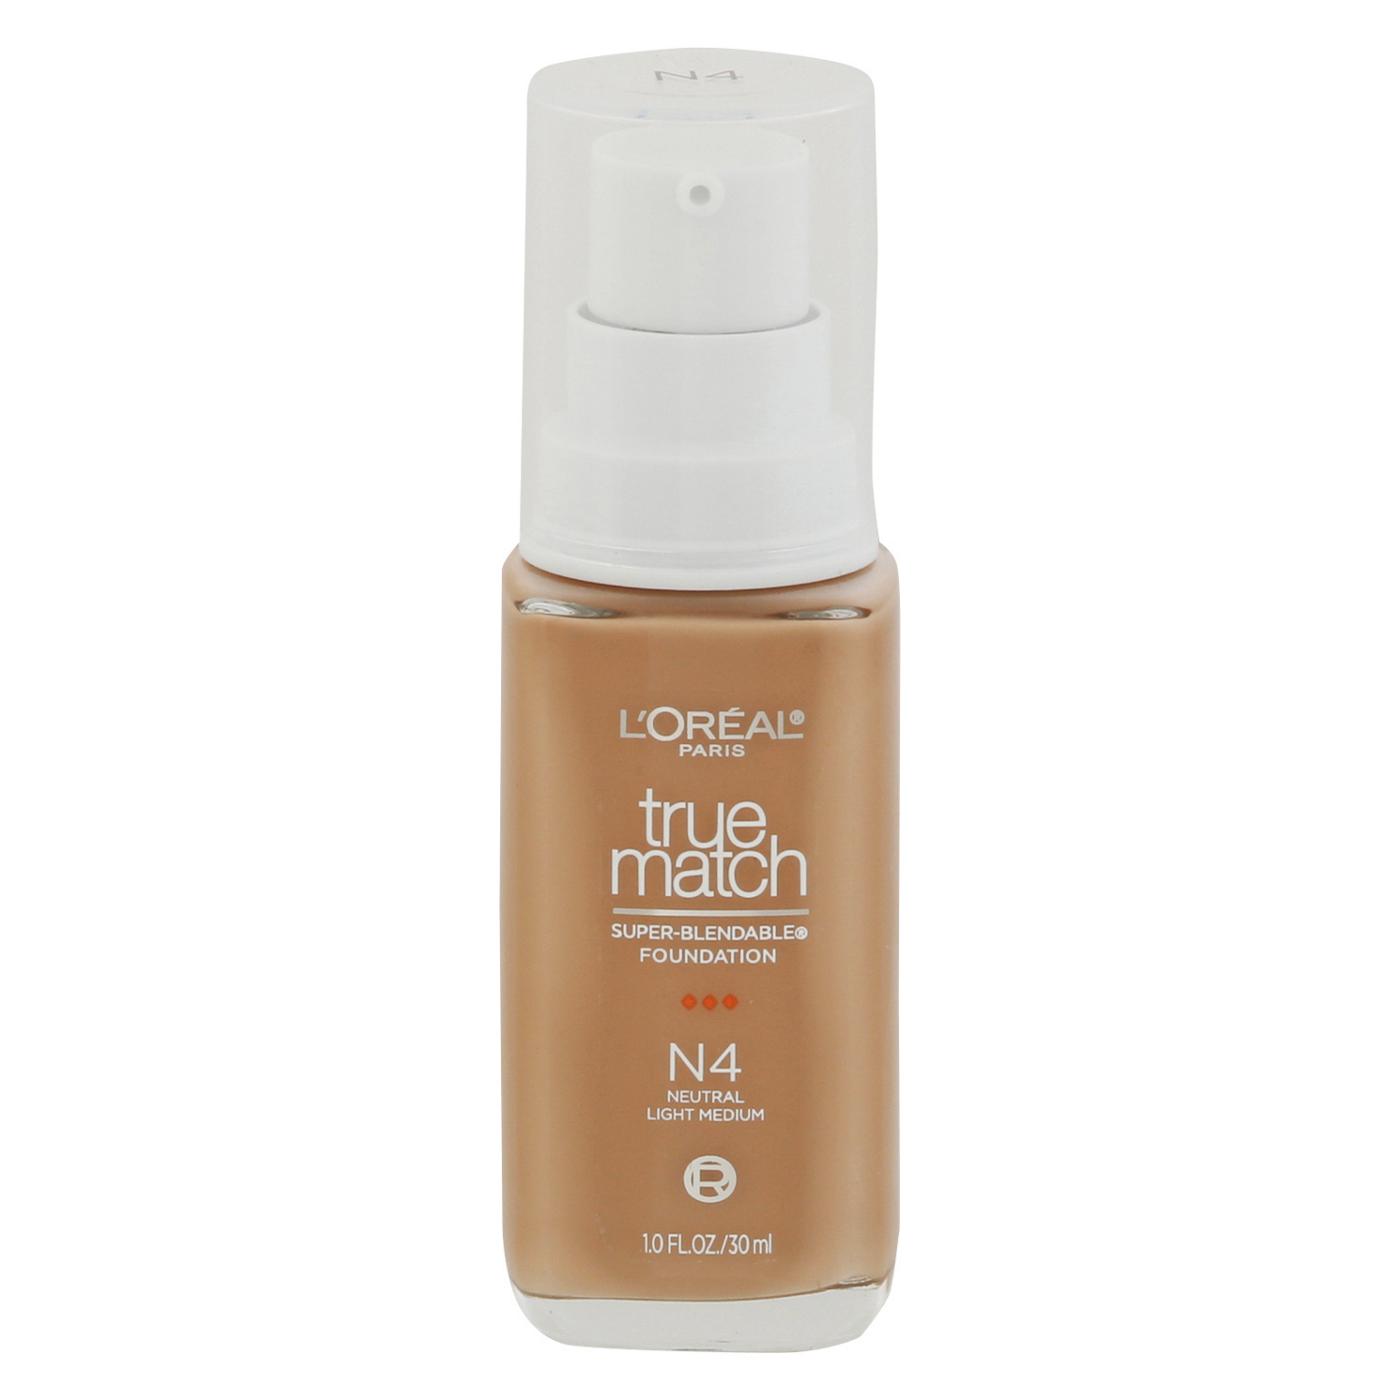 L'Oréal Paris True Match Super-Blendable Liquid Foundation - N4 Neutral Light Medium; image 1 of 8